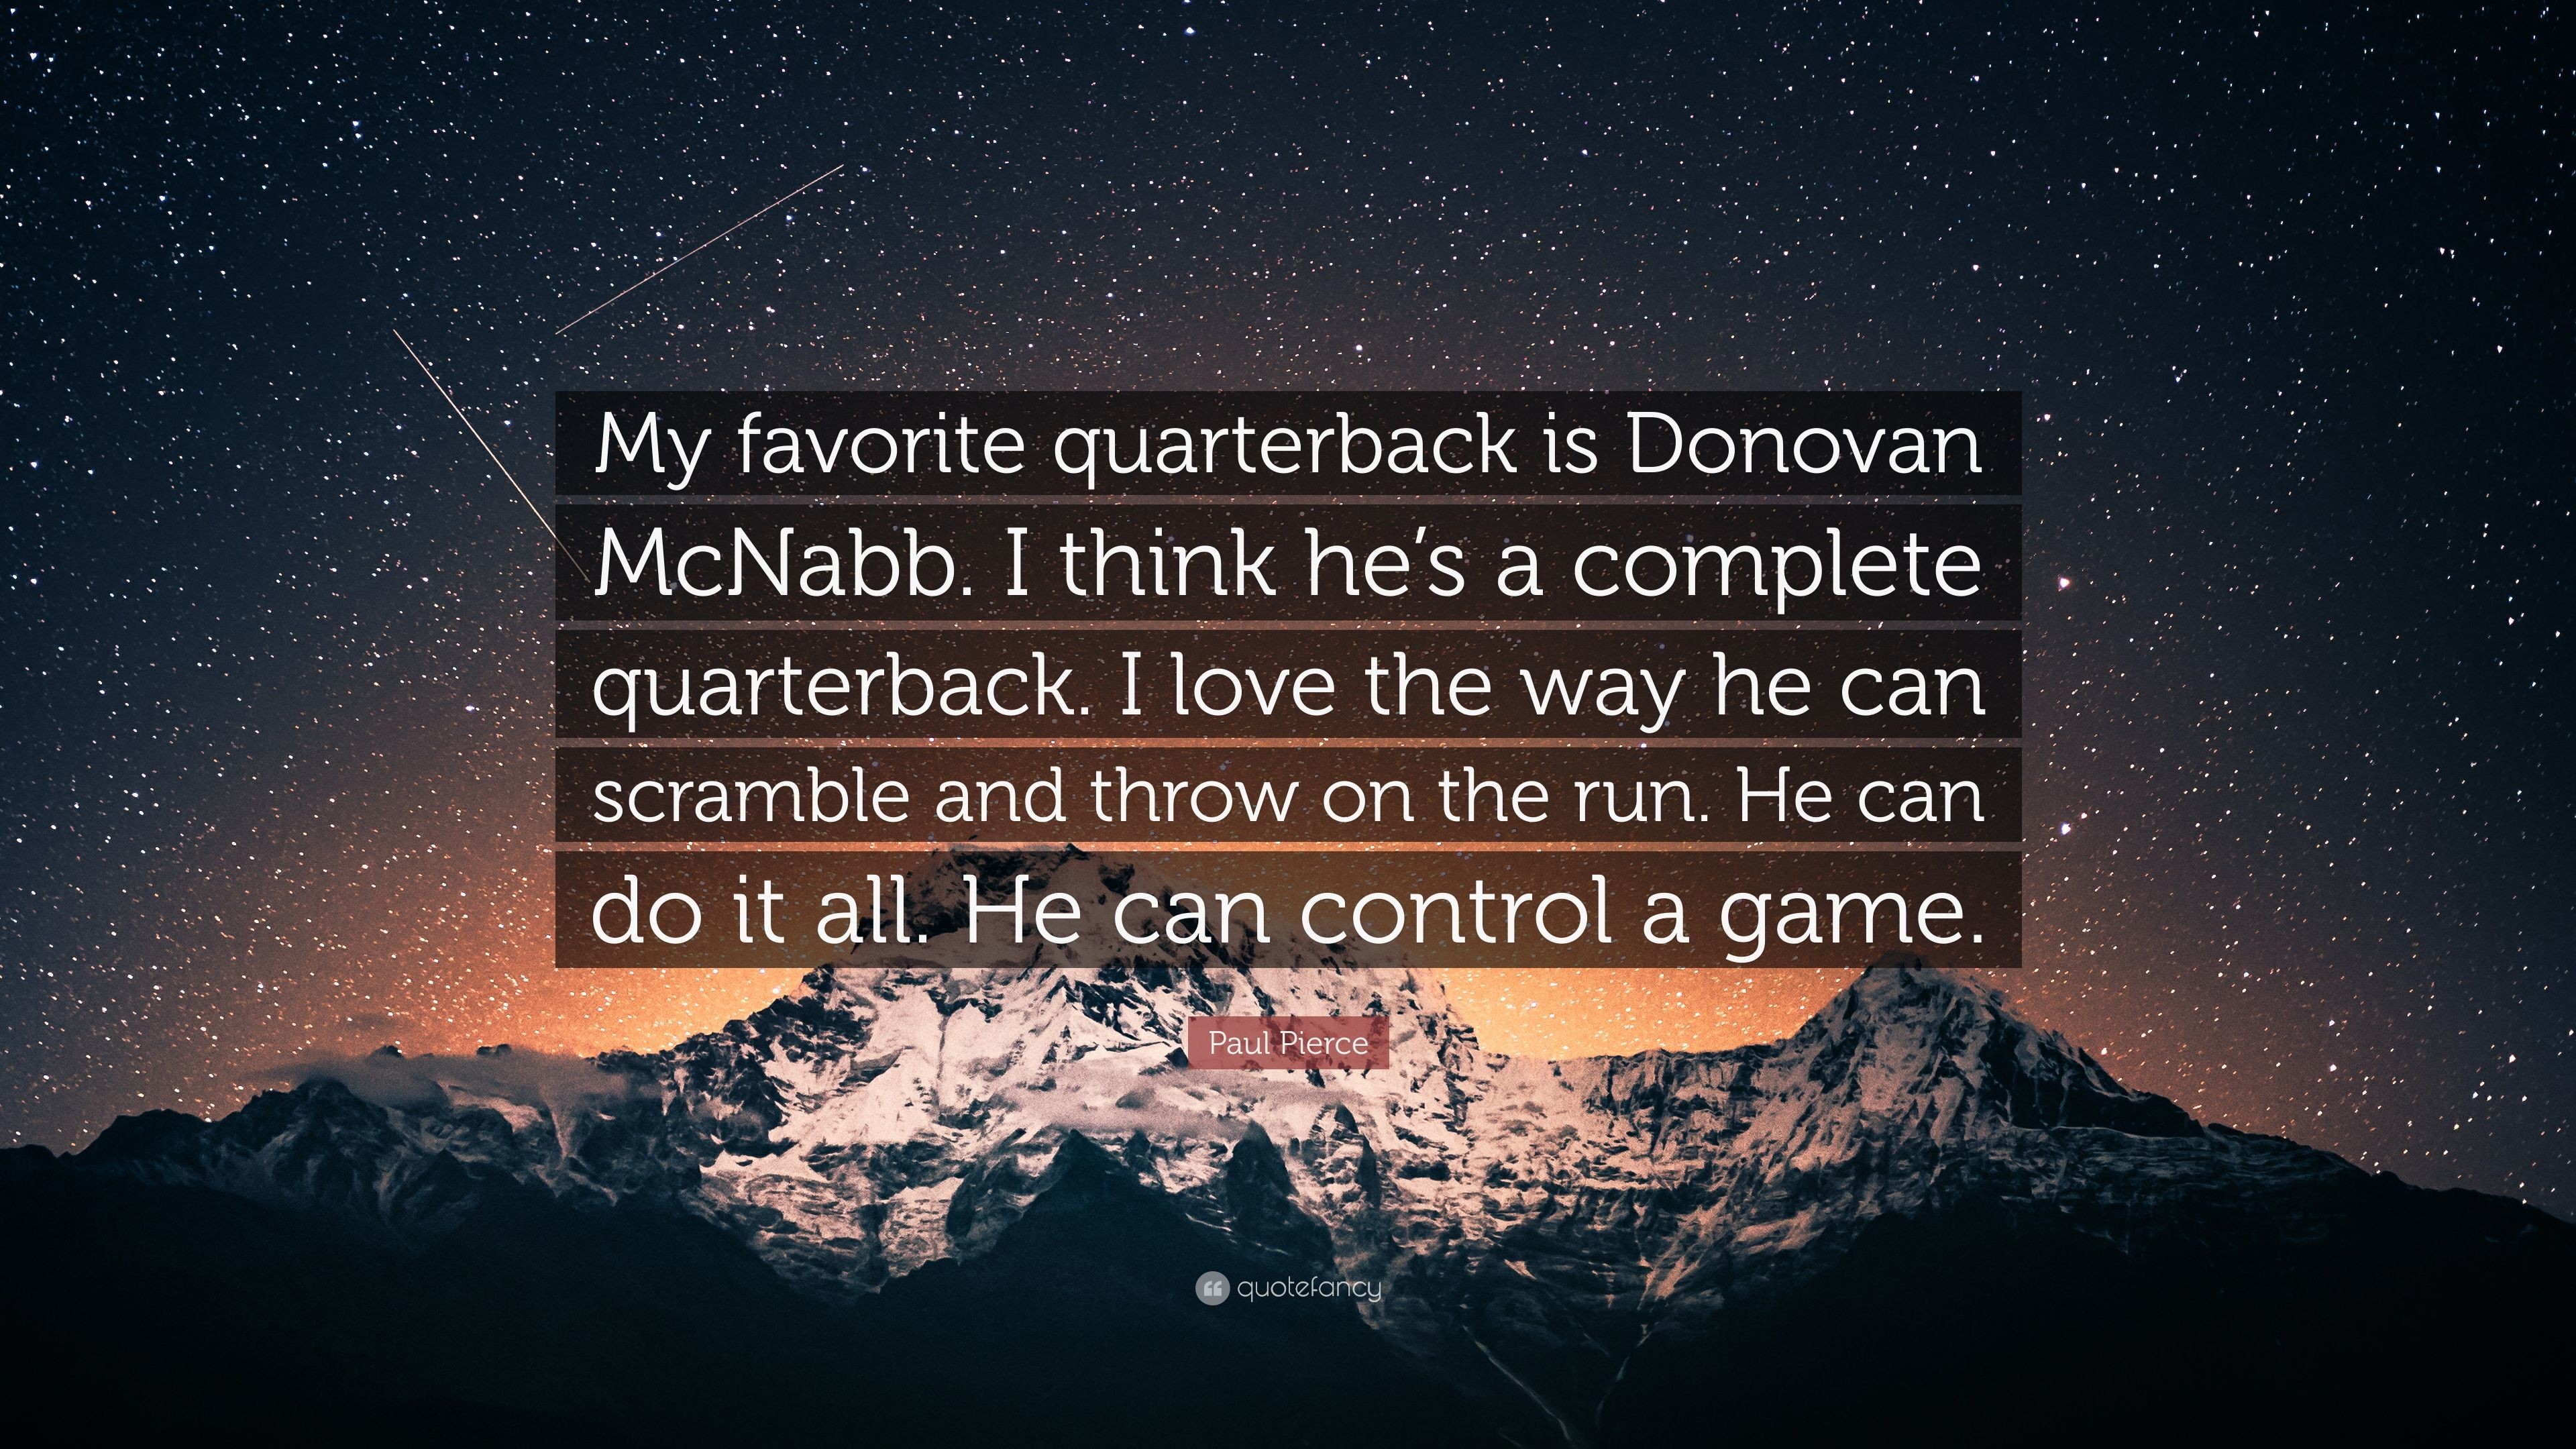 3840x2160 Paul Pierce Quote: “My favorite quarterback is Donovan McNabb. I think he's  a